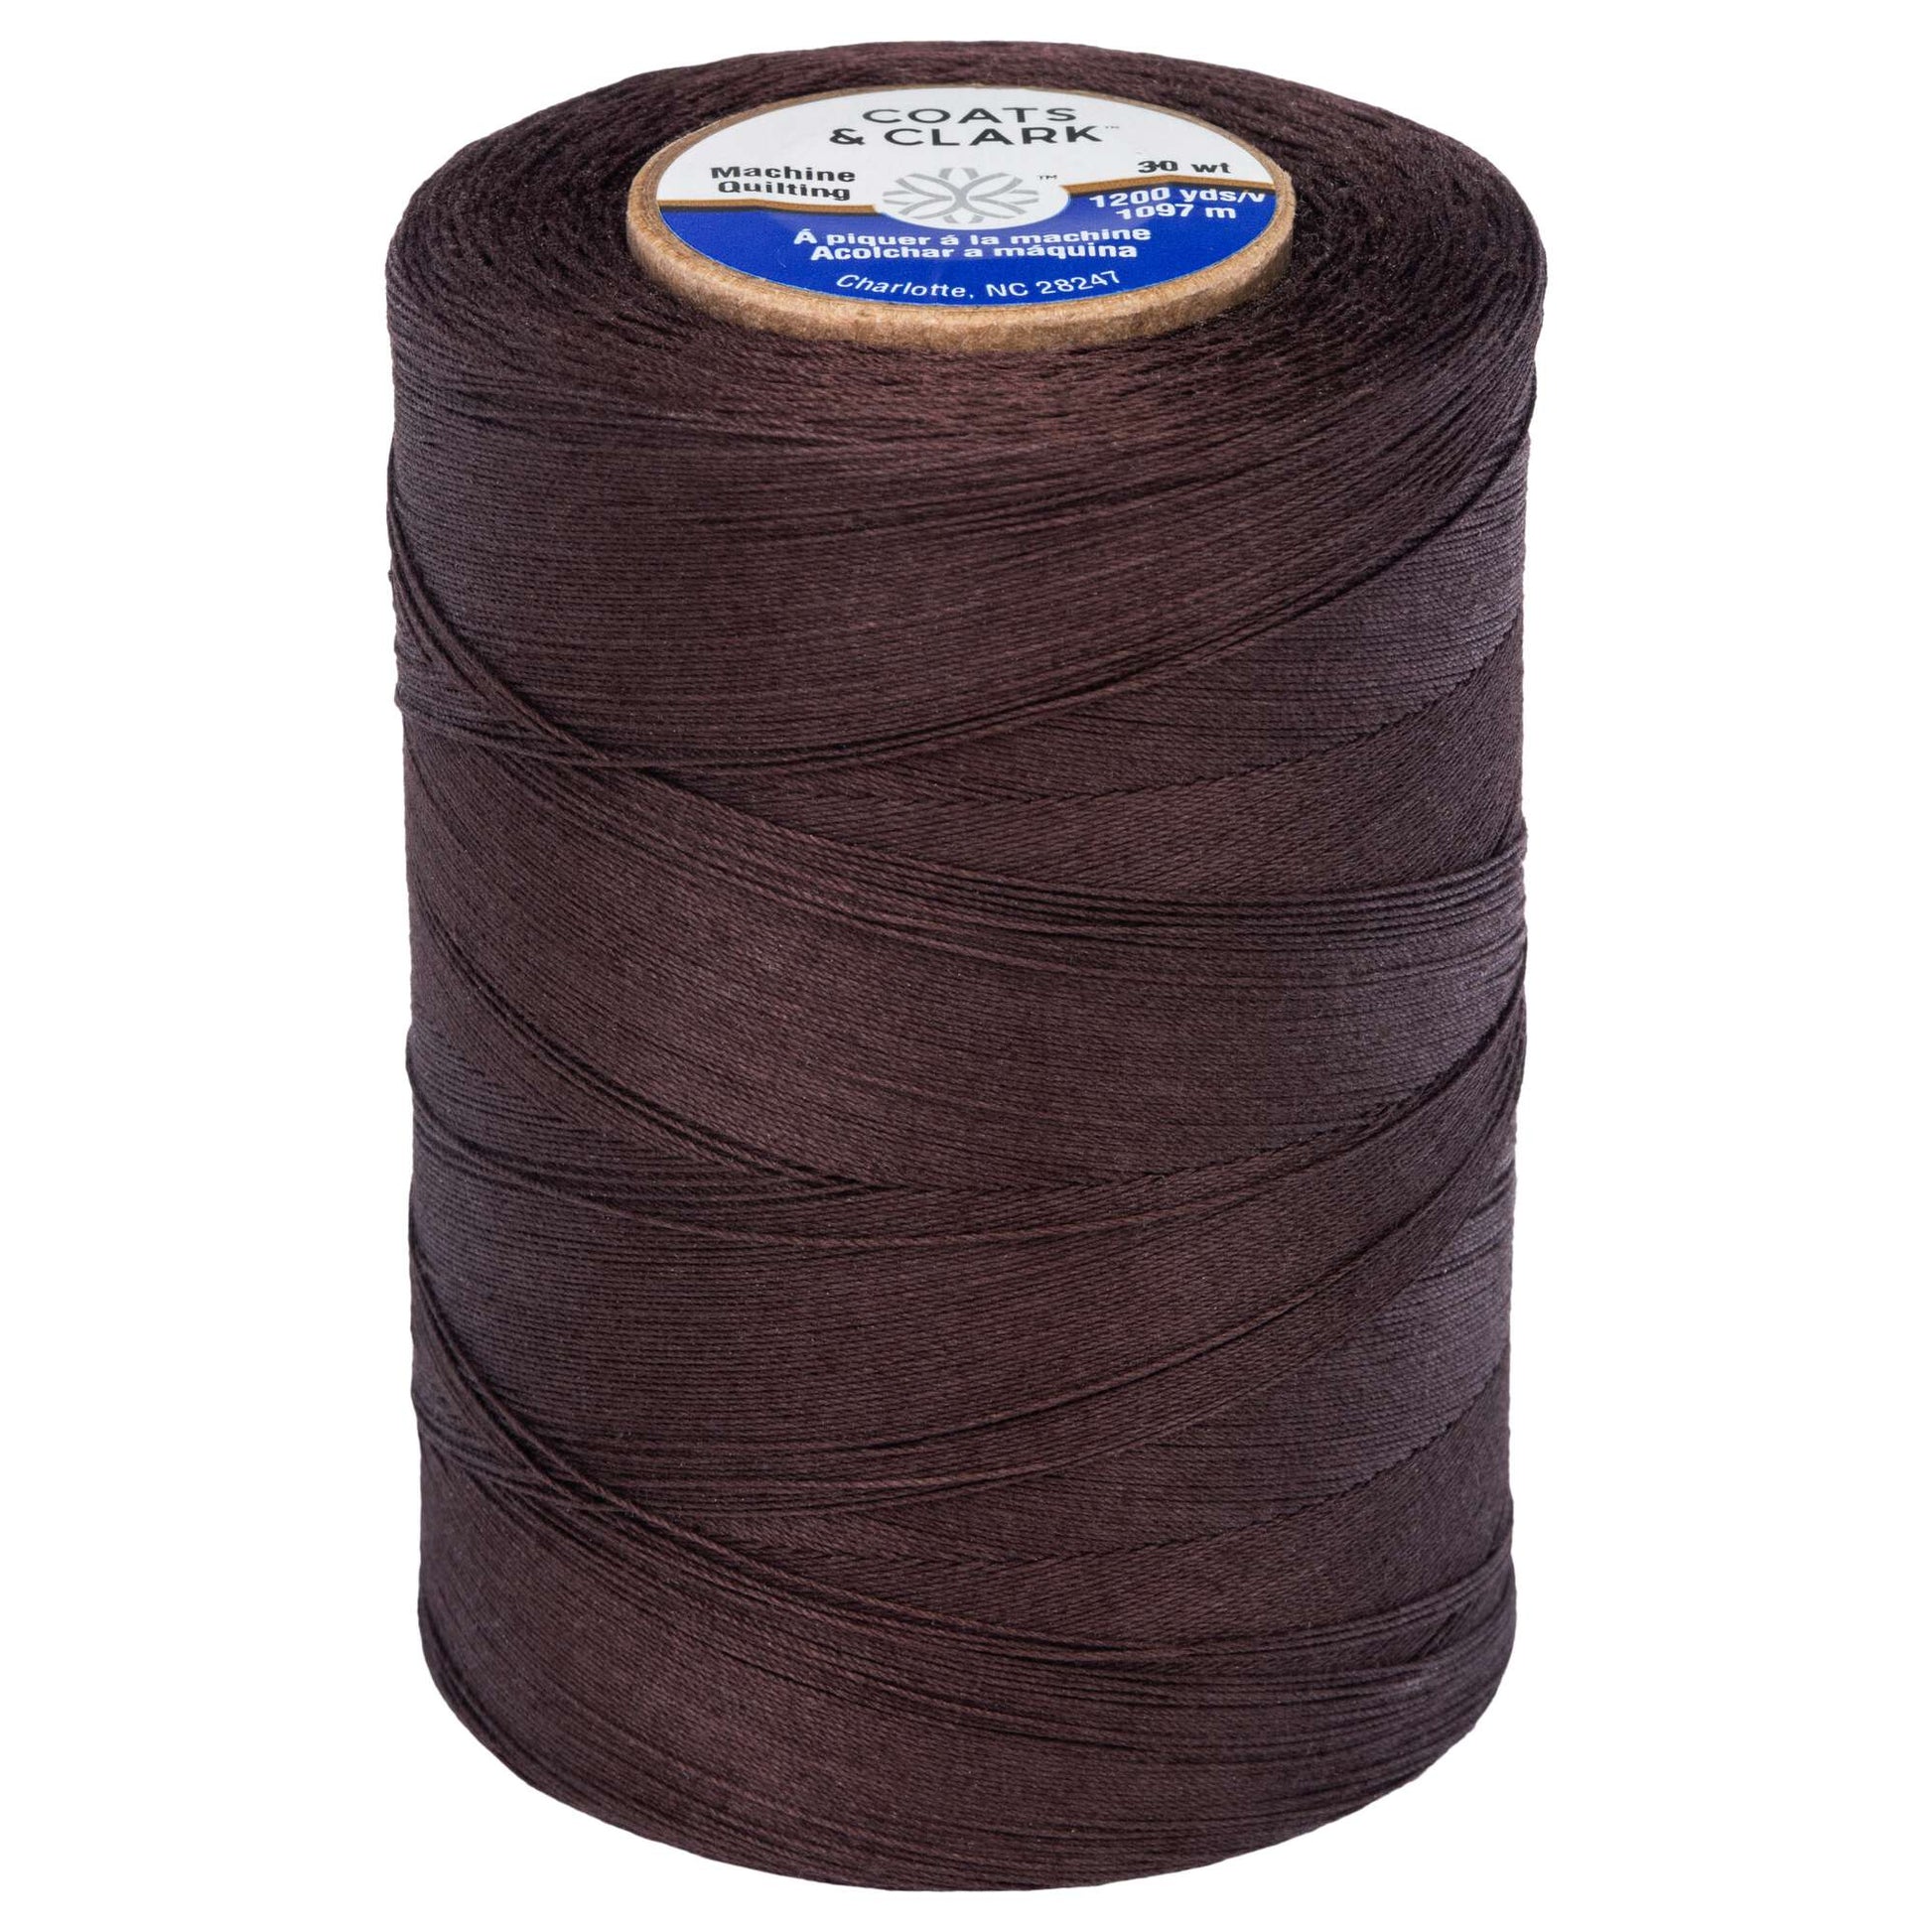 Coats & Clark Cotton Machine Quilting Thread (1200 Yards) Chona Brown